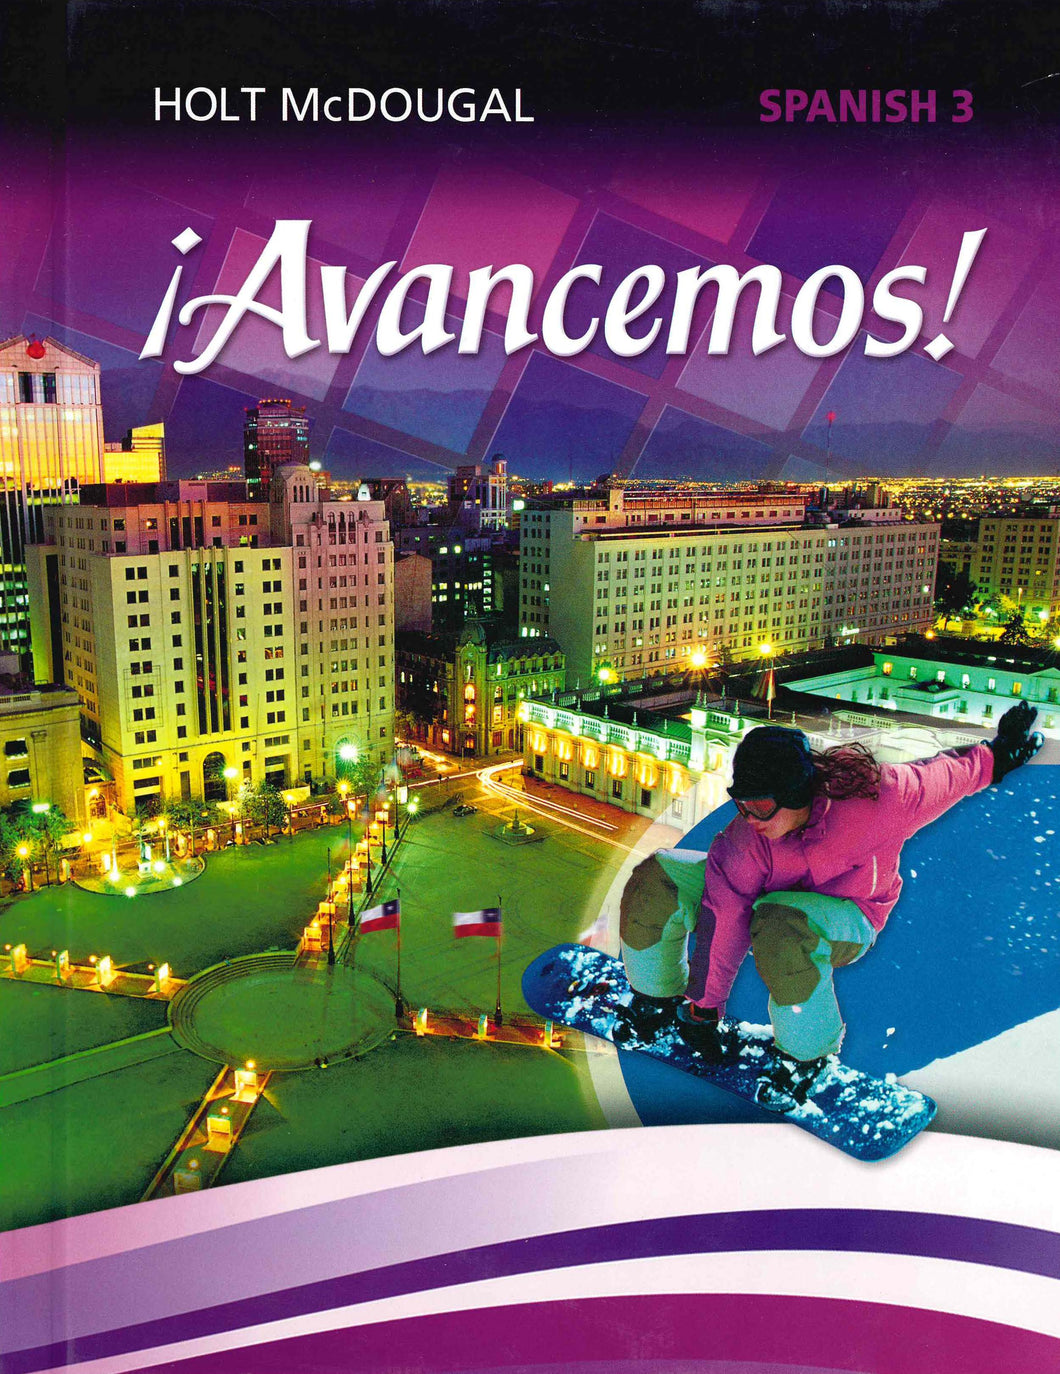 Avancemos! Spanish 3 Textbook